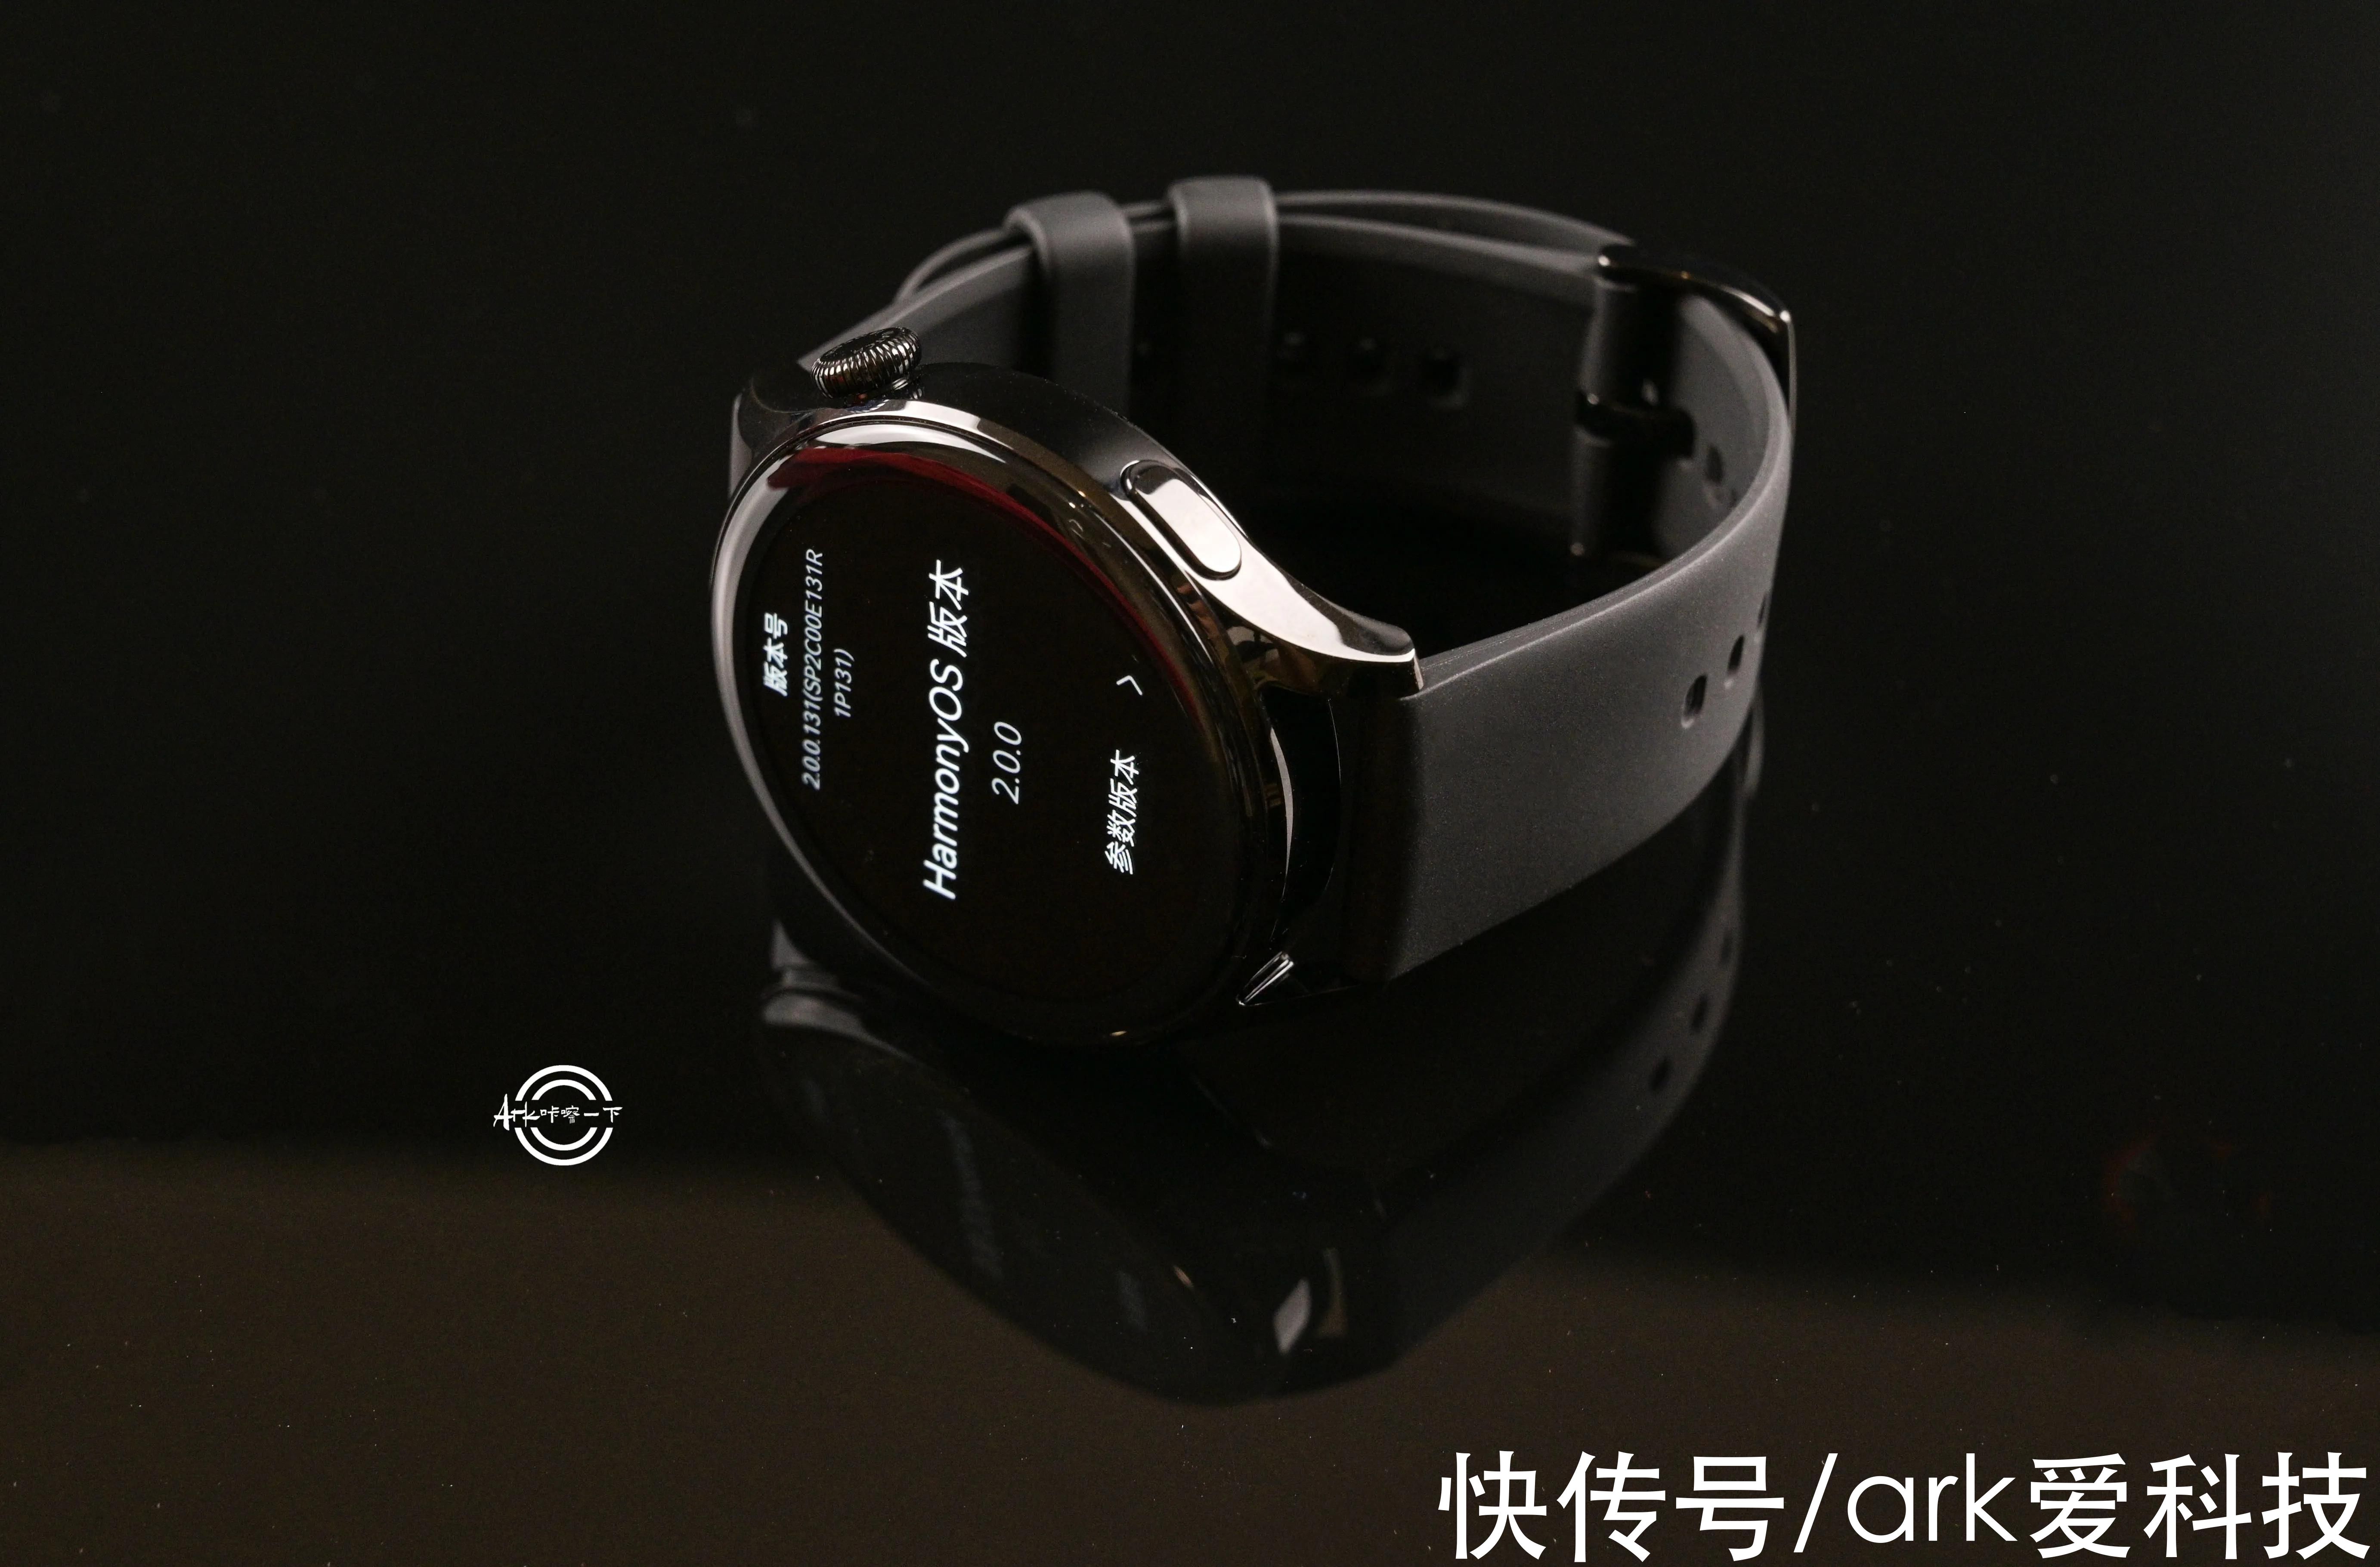 gt3|华为Watch GT3露真容，月底海外发布，荣耀手表GS3何时来？